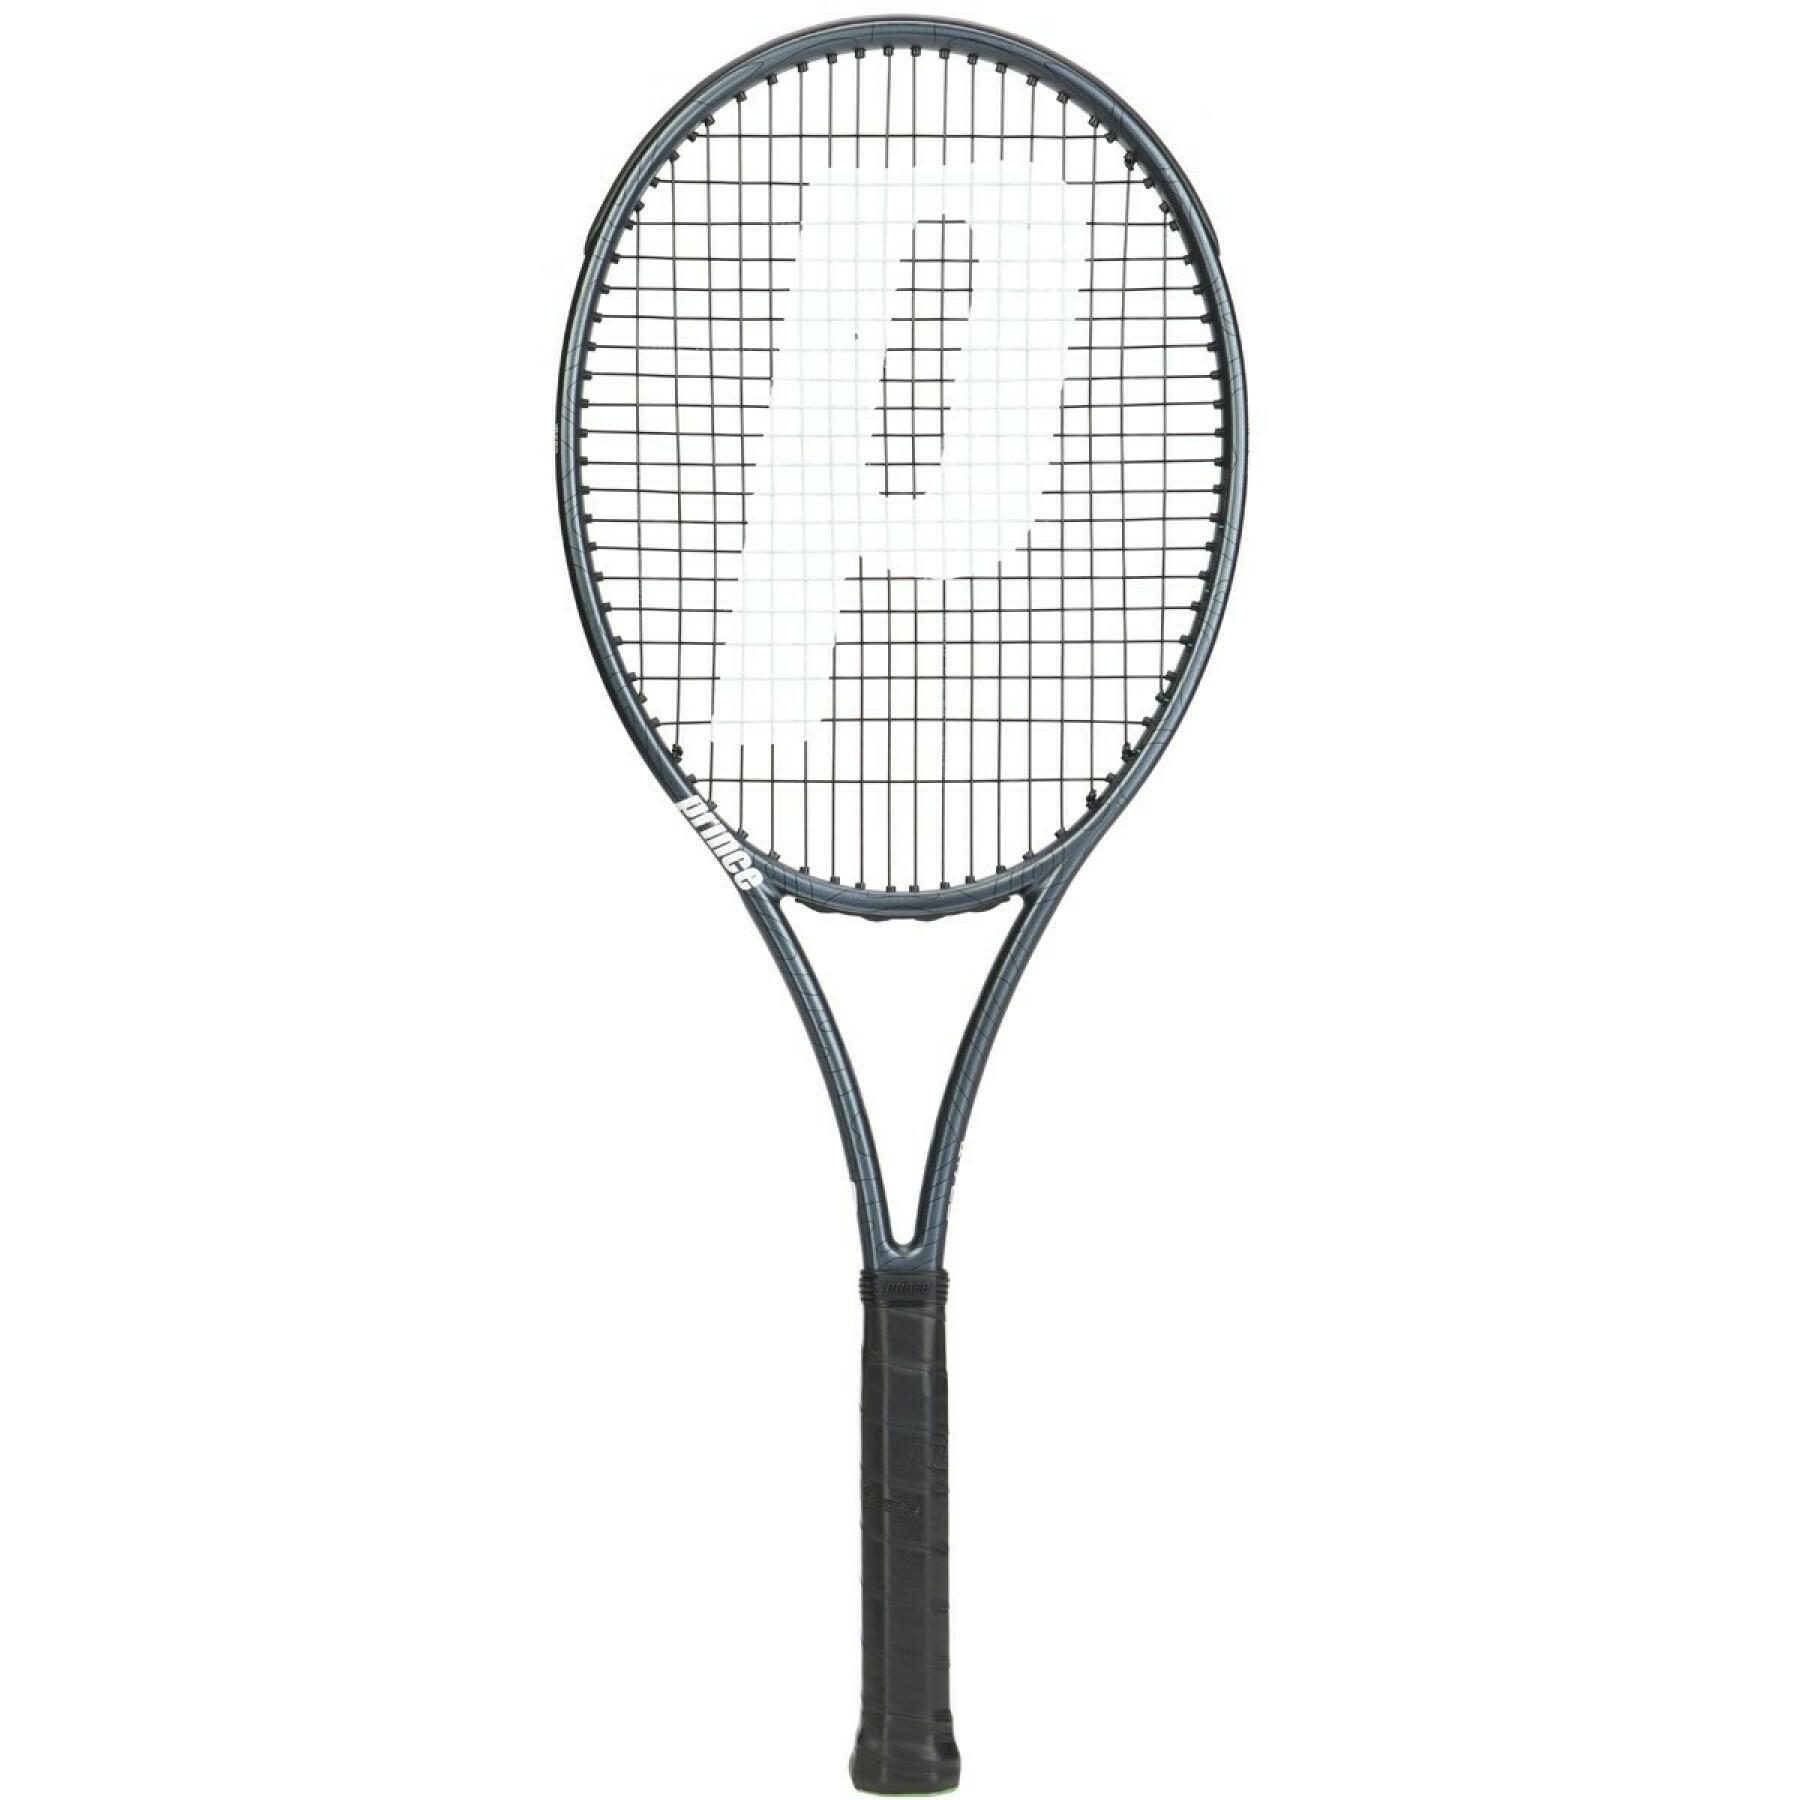 Tennis racket Prince phantom 100x 18x20